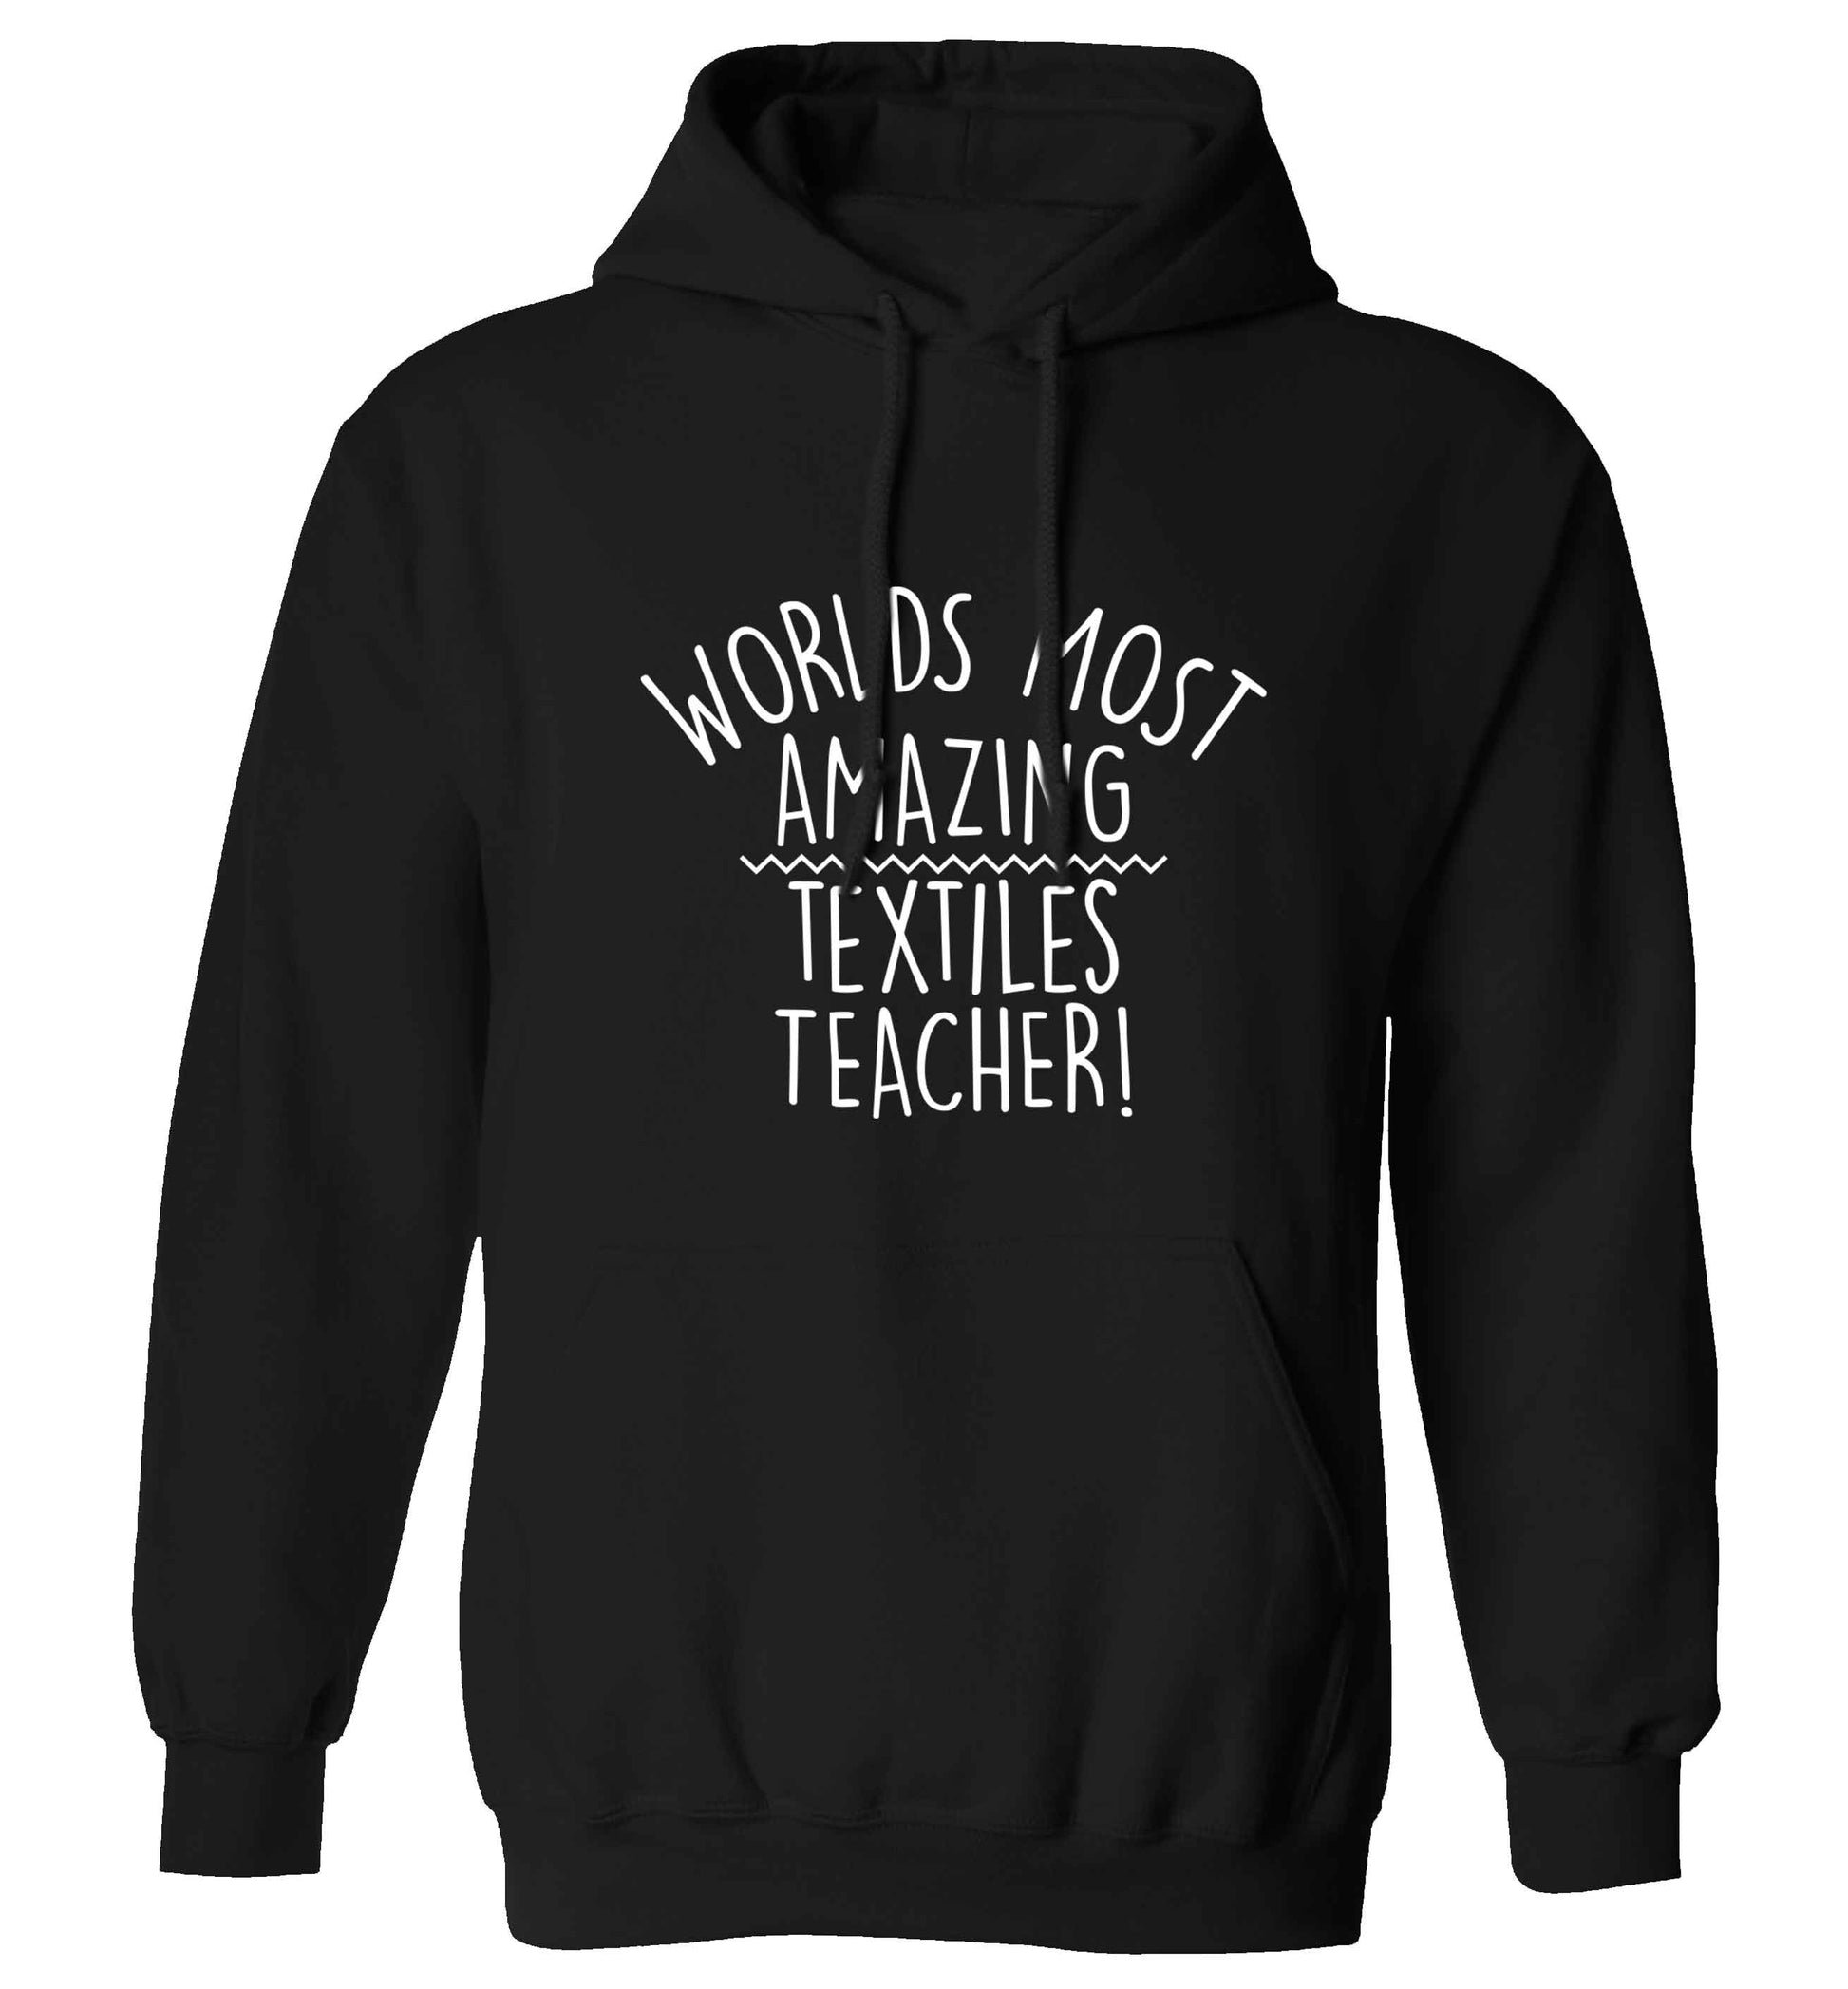 Worlds most amazing textiles teacher adults unisex black hoodie 2XL